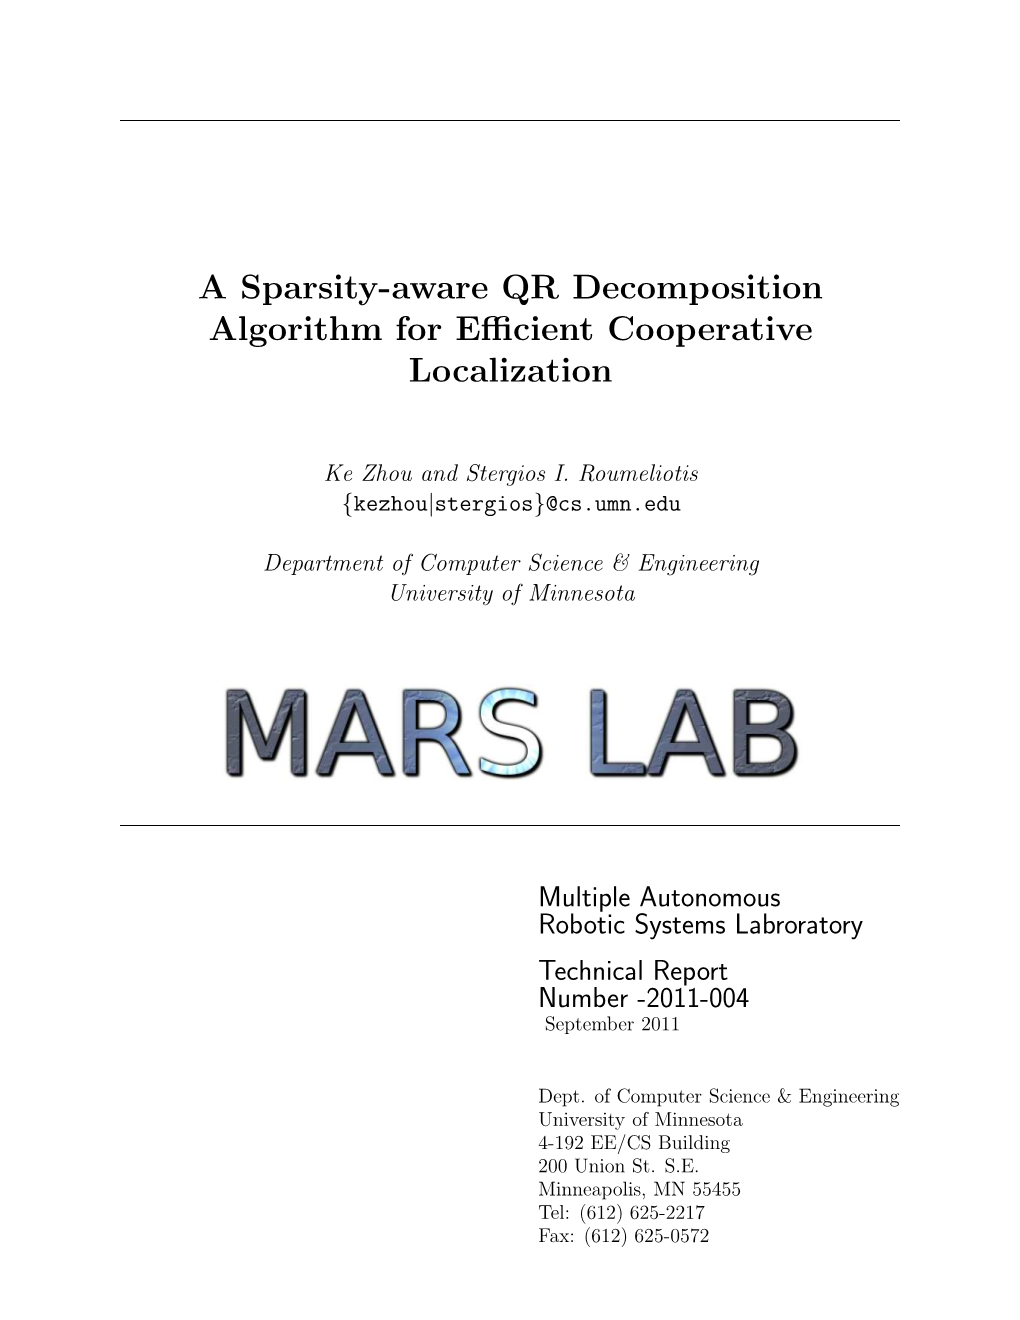 A Sparsity-Aware QR Decomposition Algorithm for Efficient Cooperative